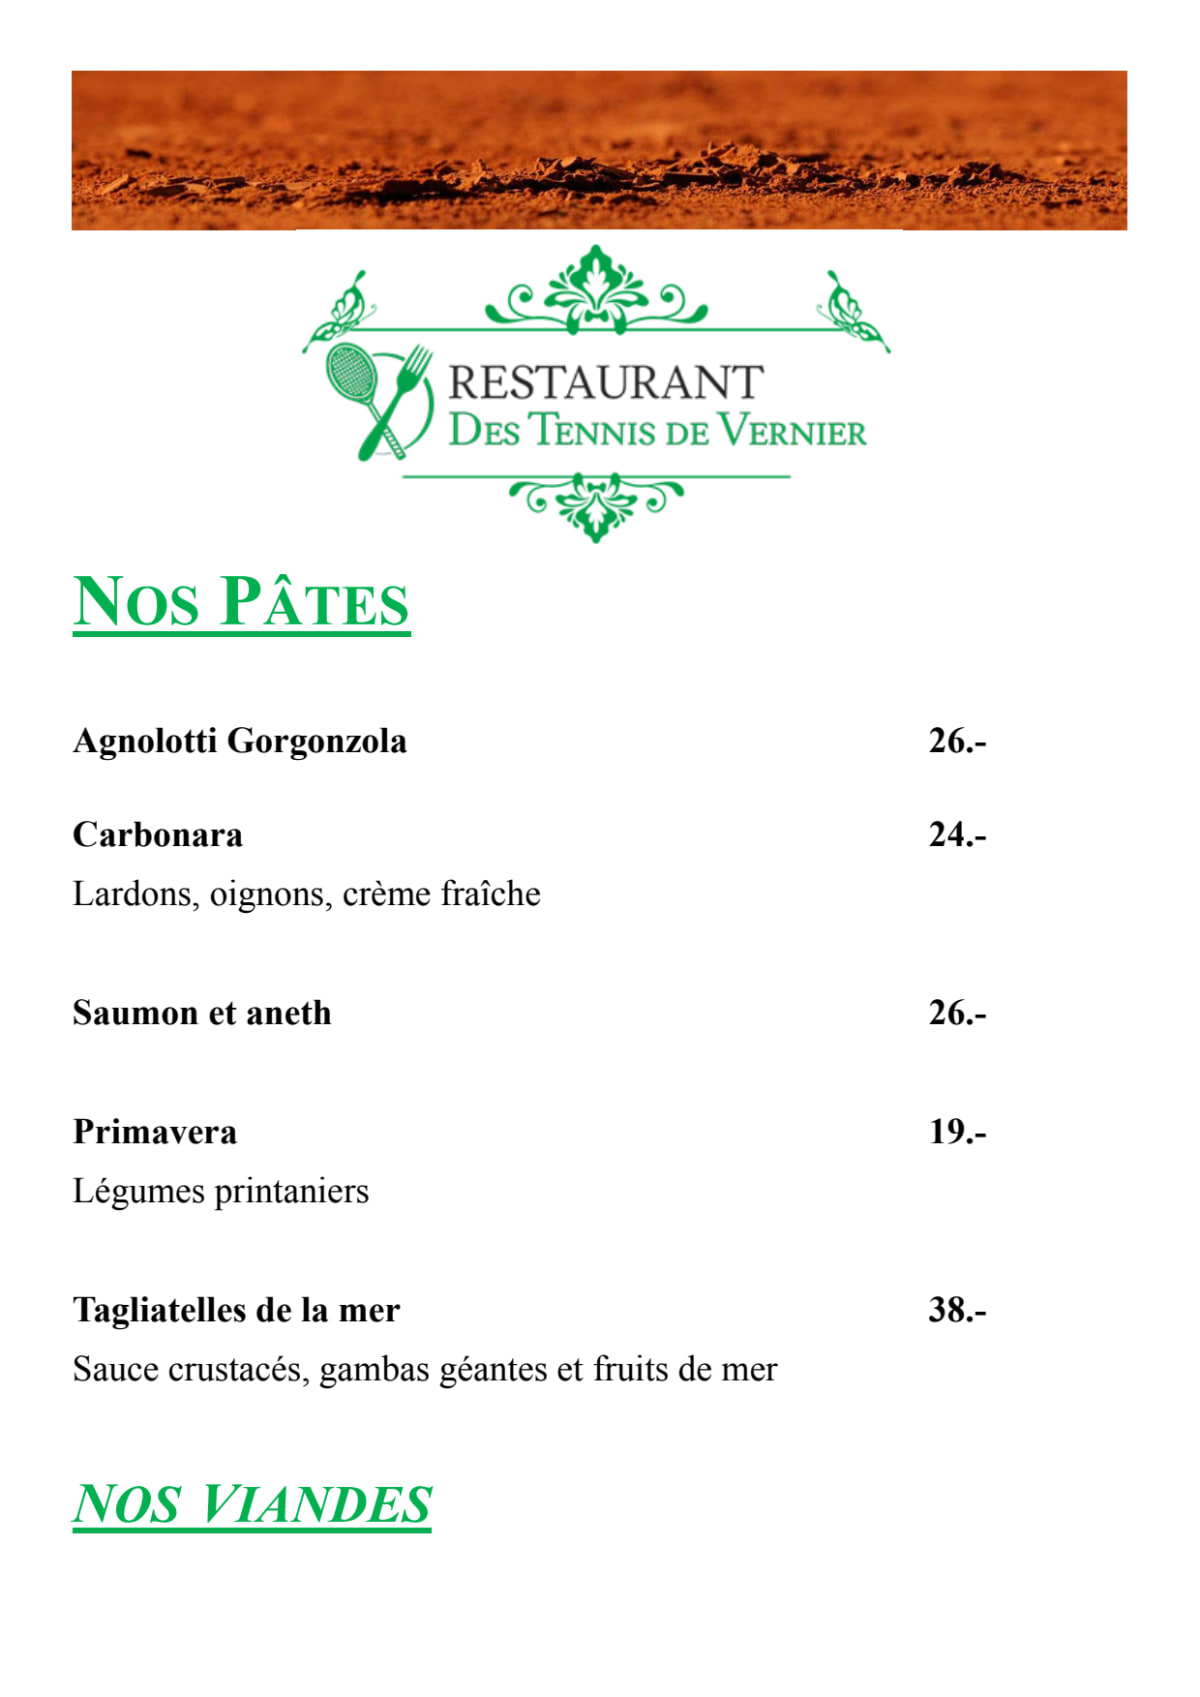 Restaurant des Tennis de Vernier menu